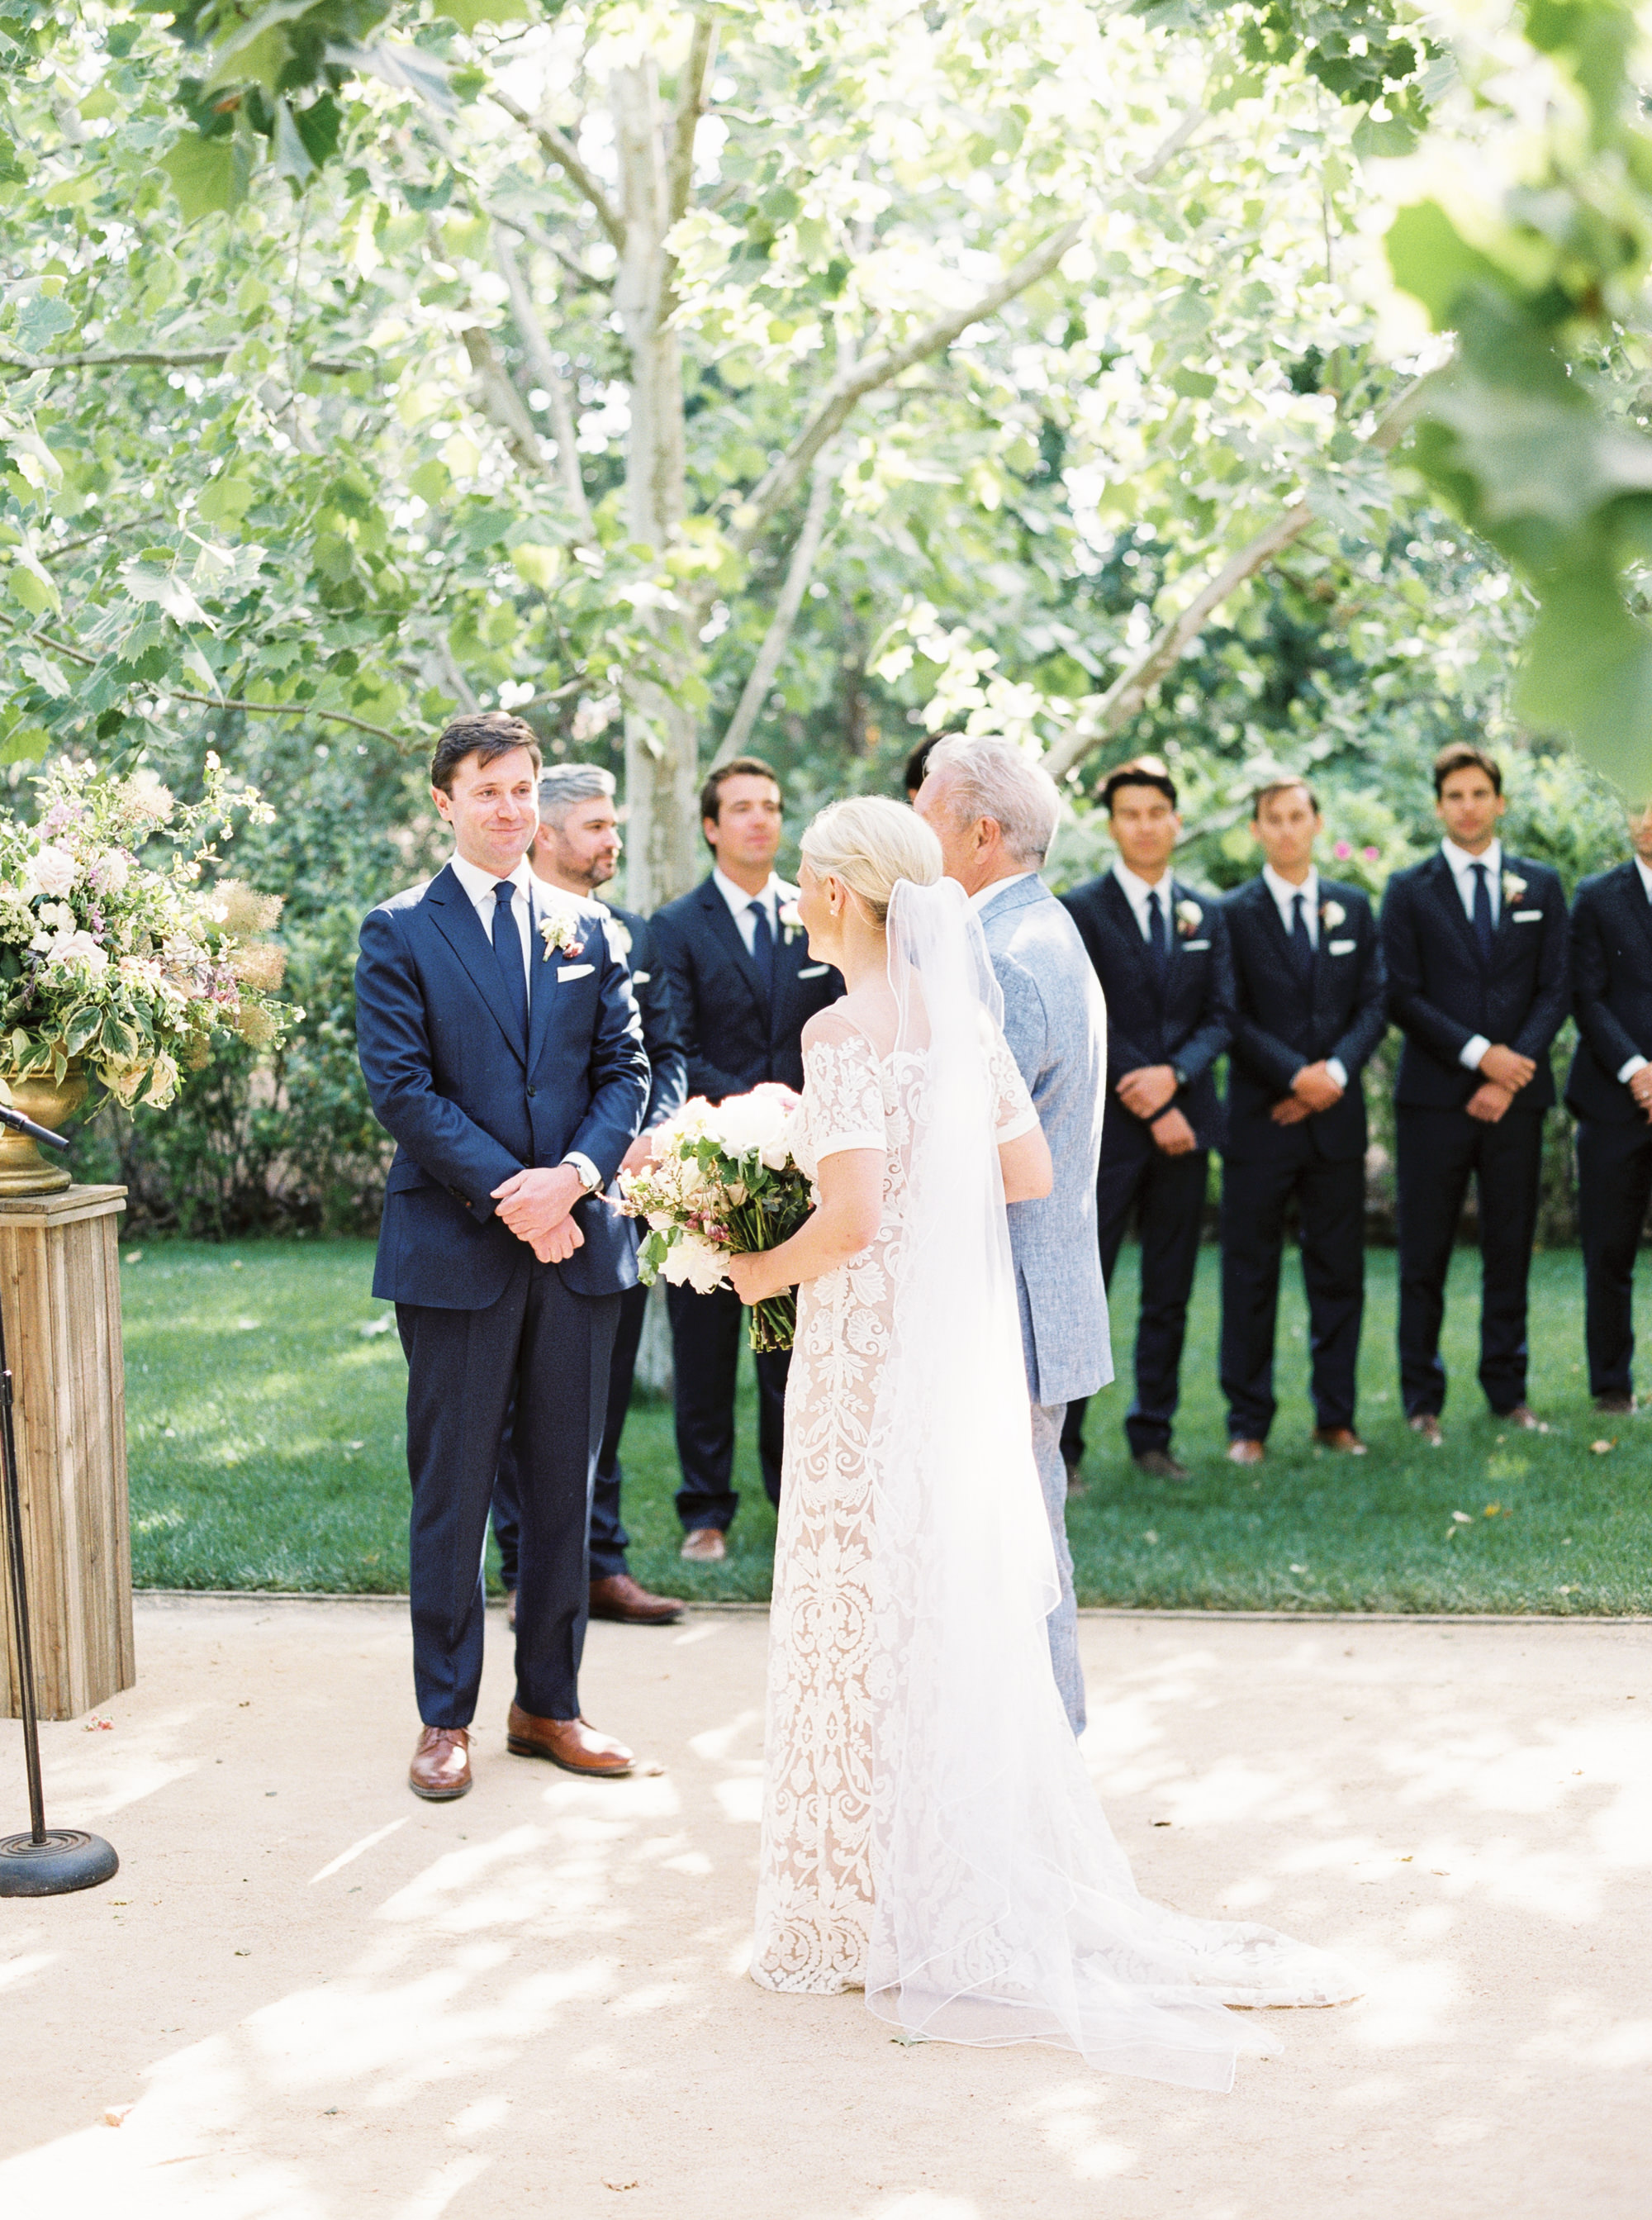 Kestrel Park wedding ceremony